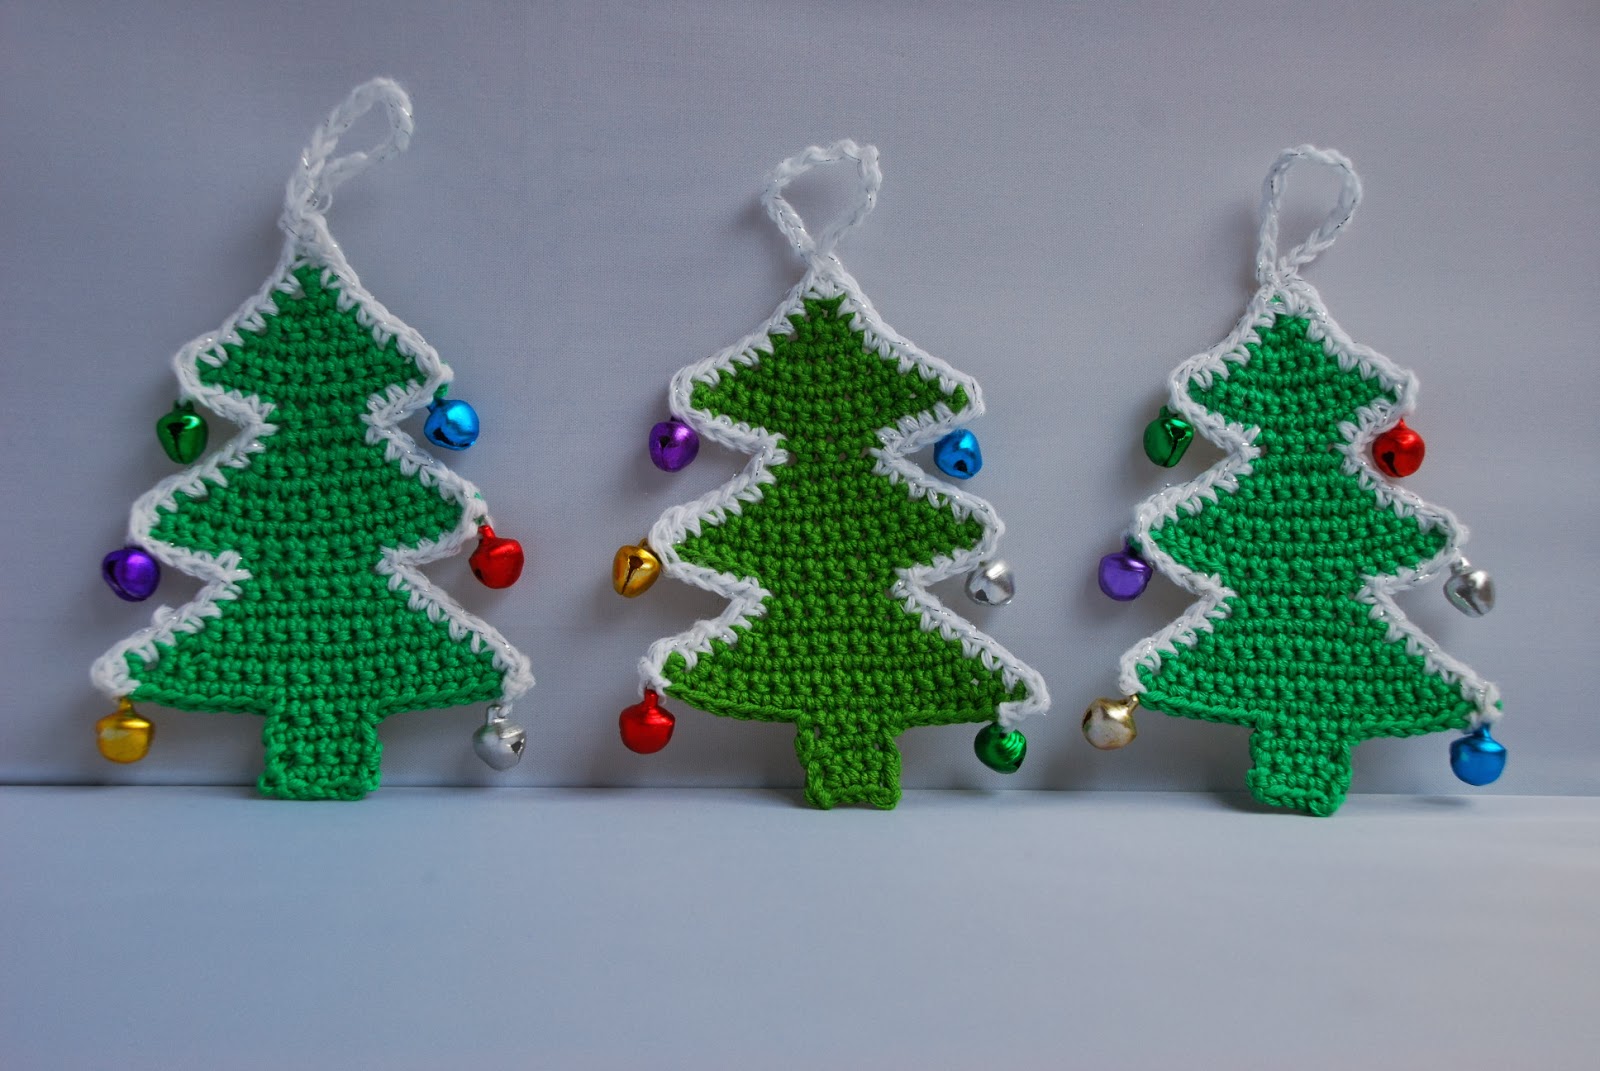  Christmas  Decoration  Crochet Patterns  Ideas Christmas  